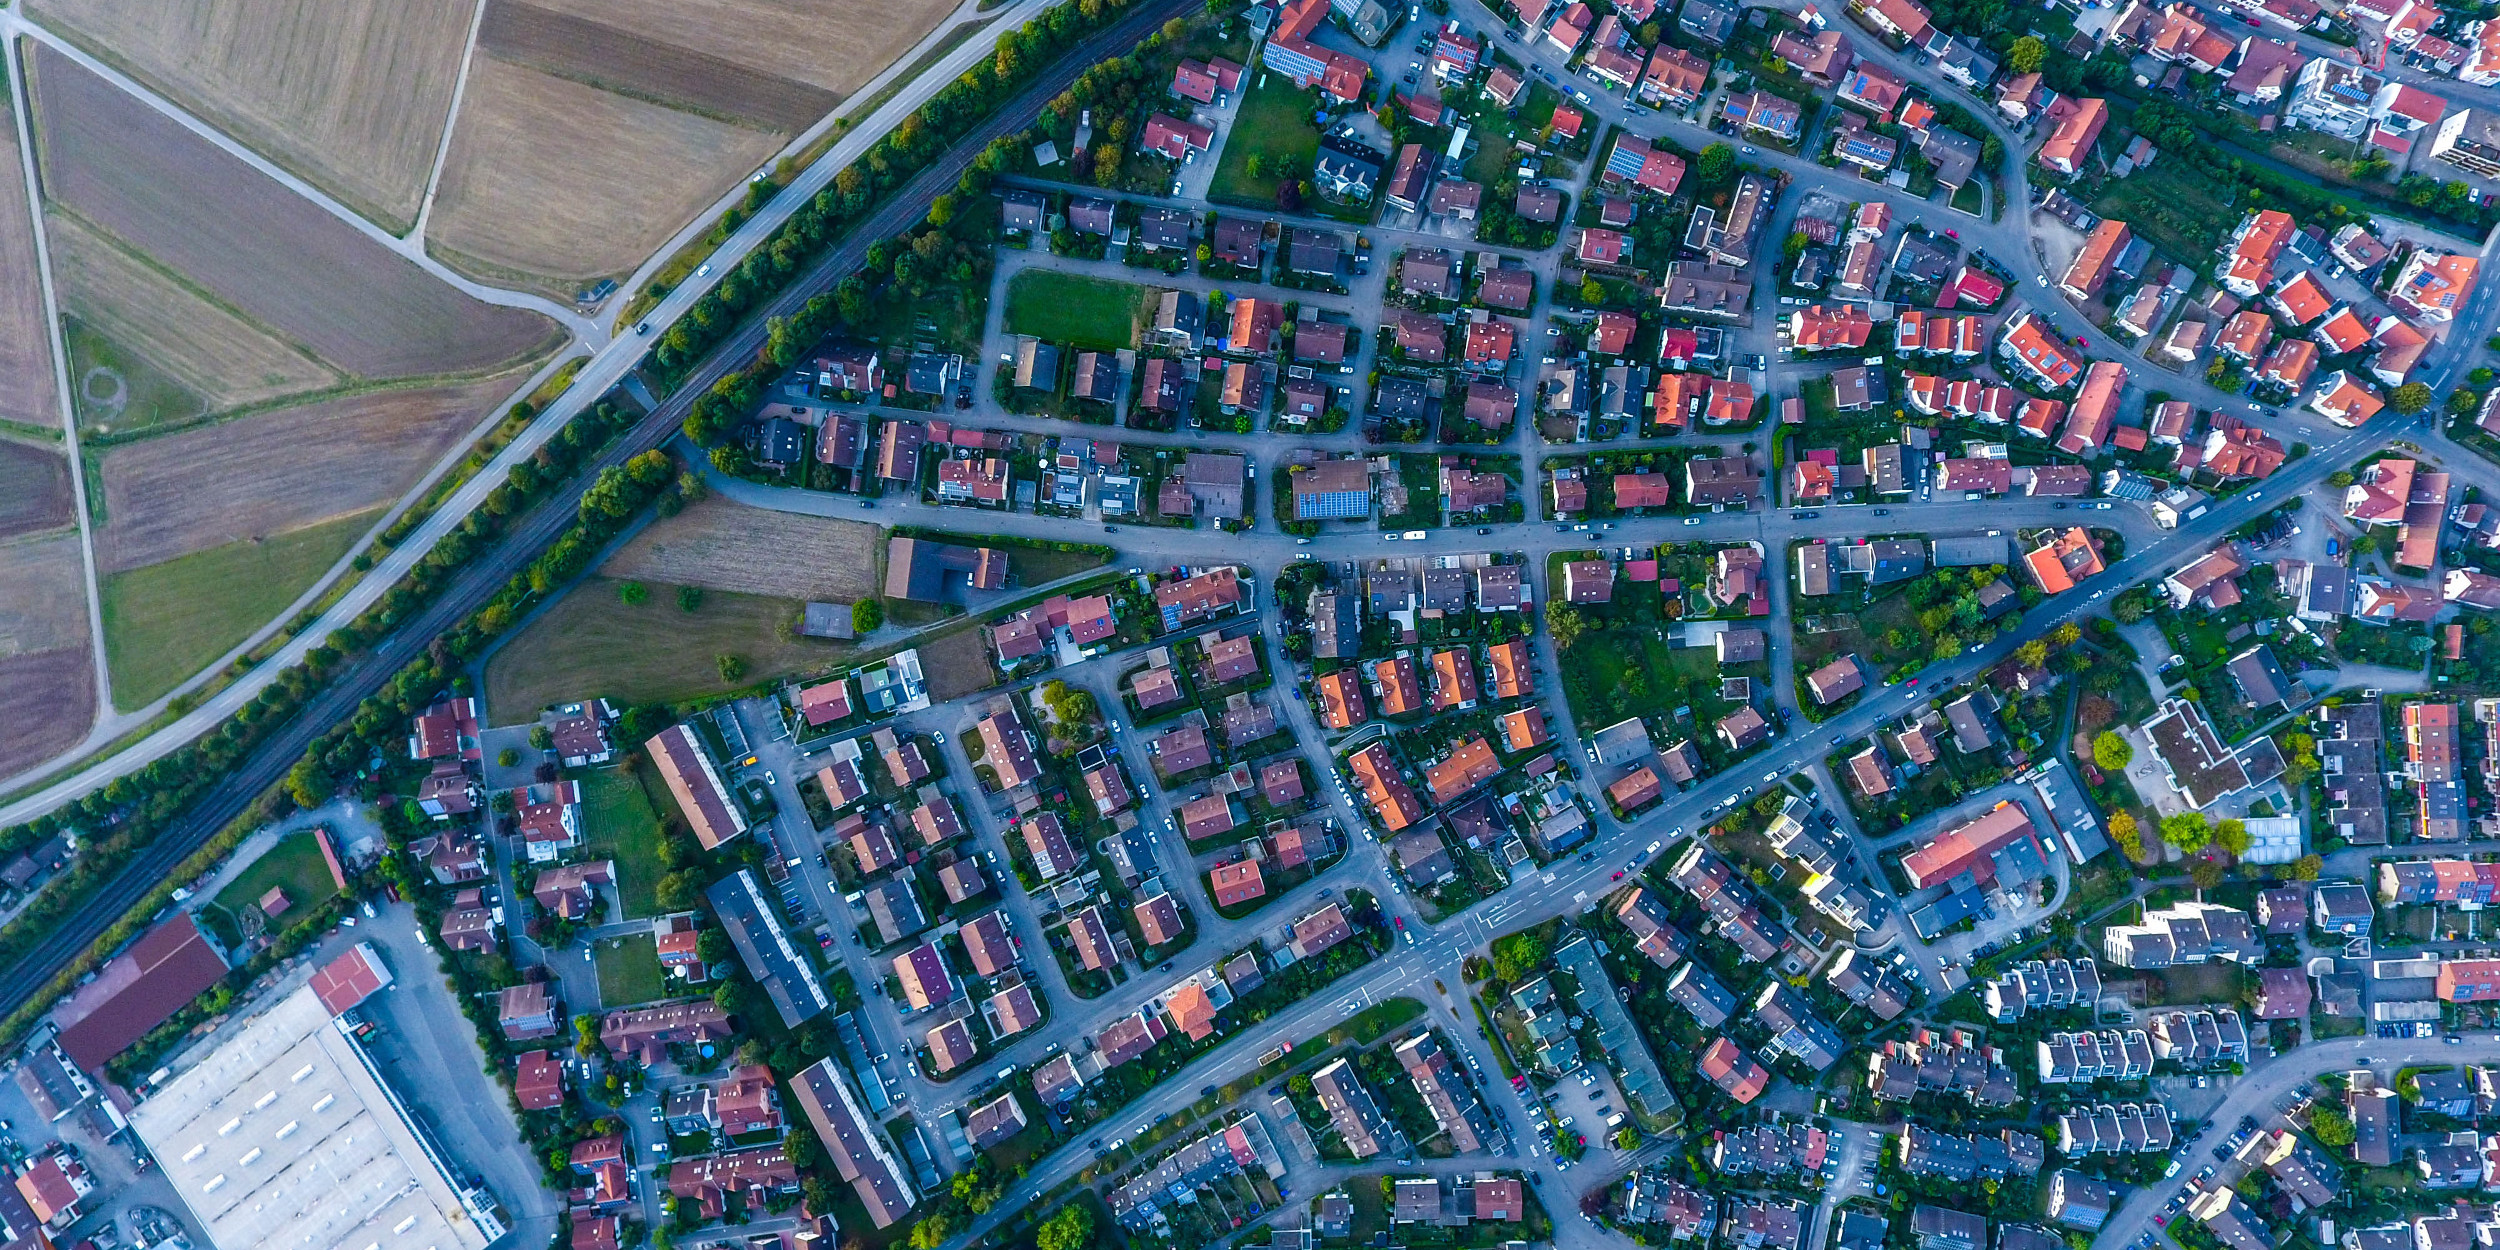 Image: Contrast between highly dense and rural areas in Ehningen, Germany. Max Böttinger, Unsplash.